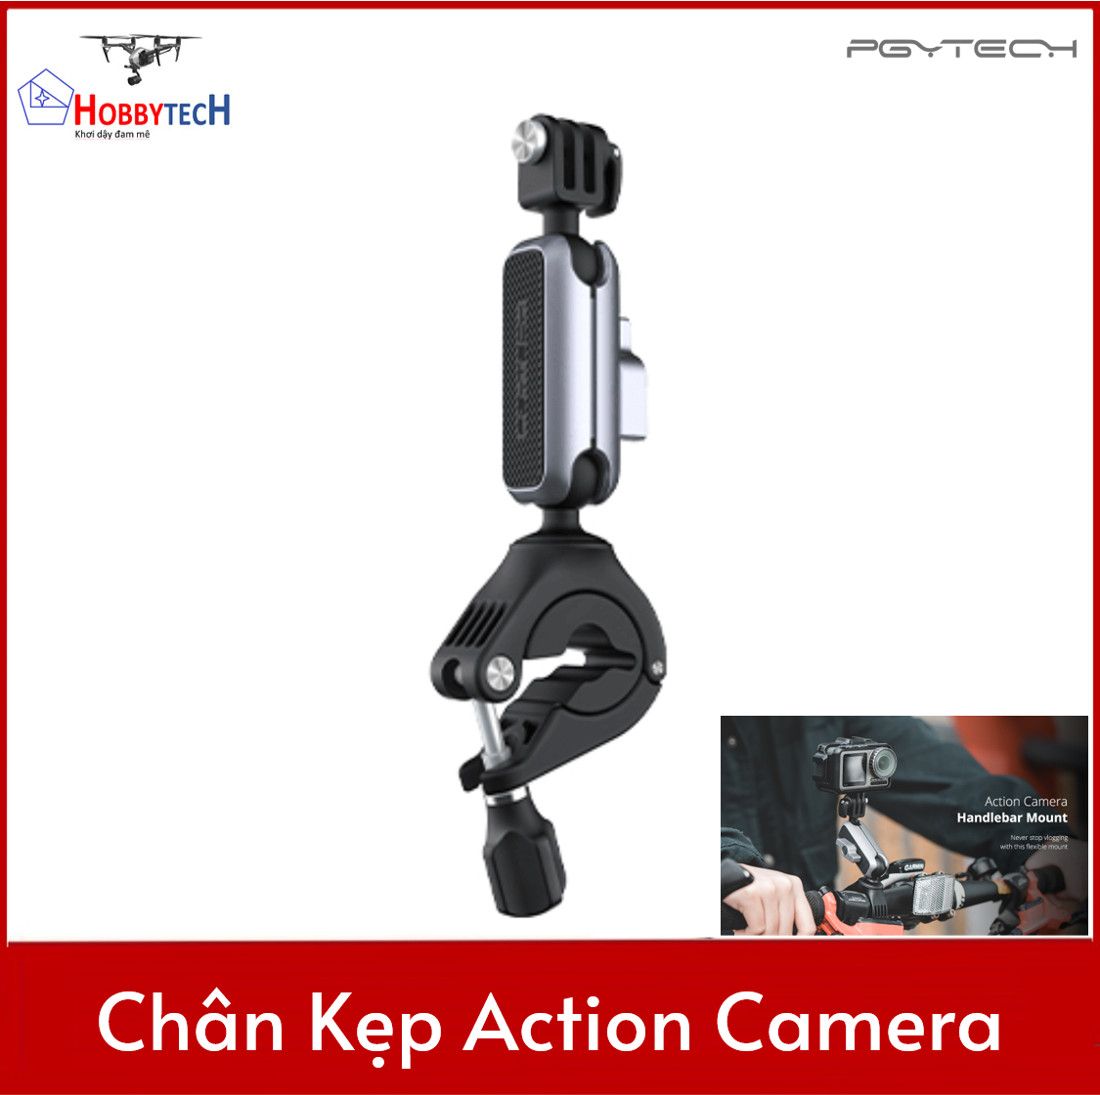 Phụ kiện PGYTECH Action Camera Handlebar Mount - Giá kẹp tay lái cho Action Camera